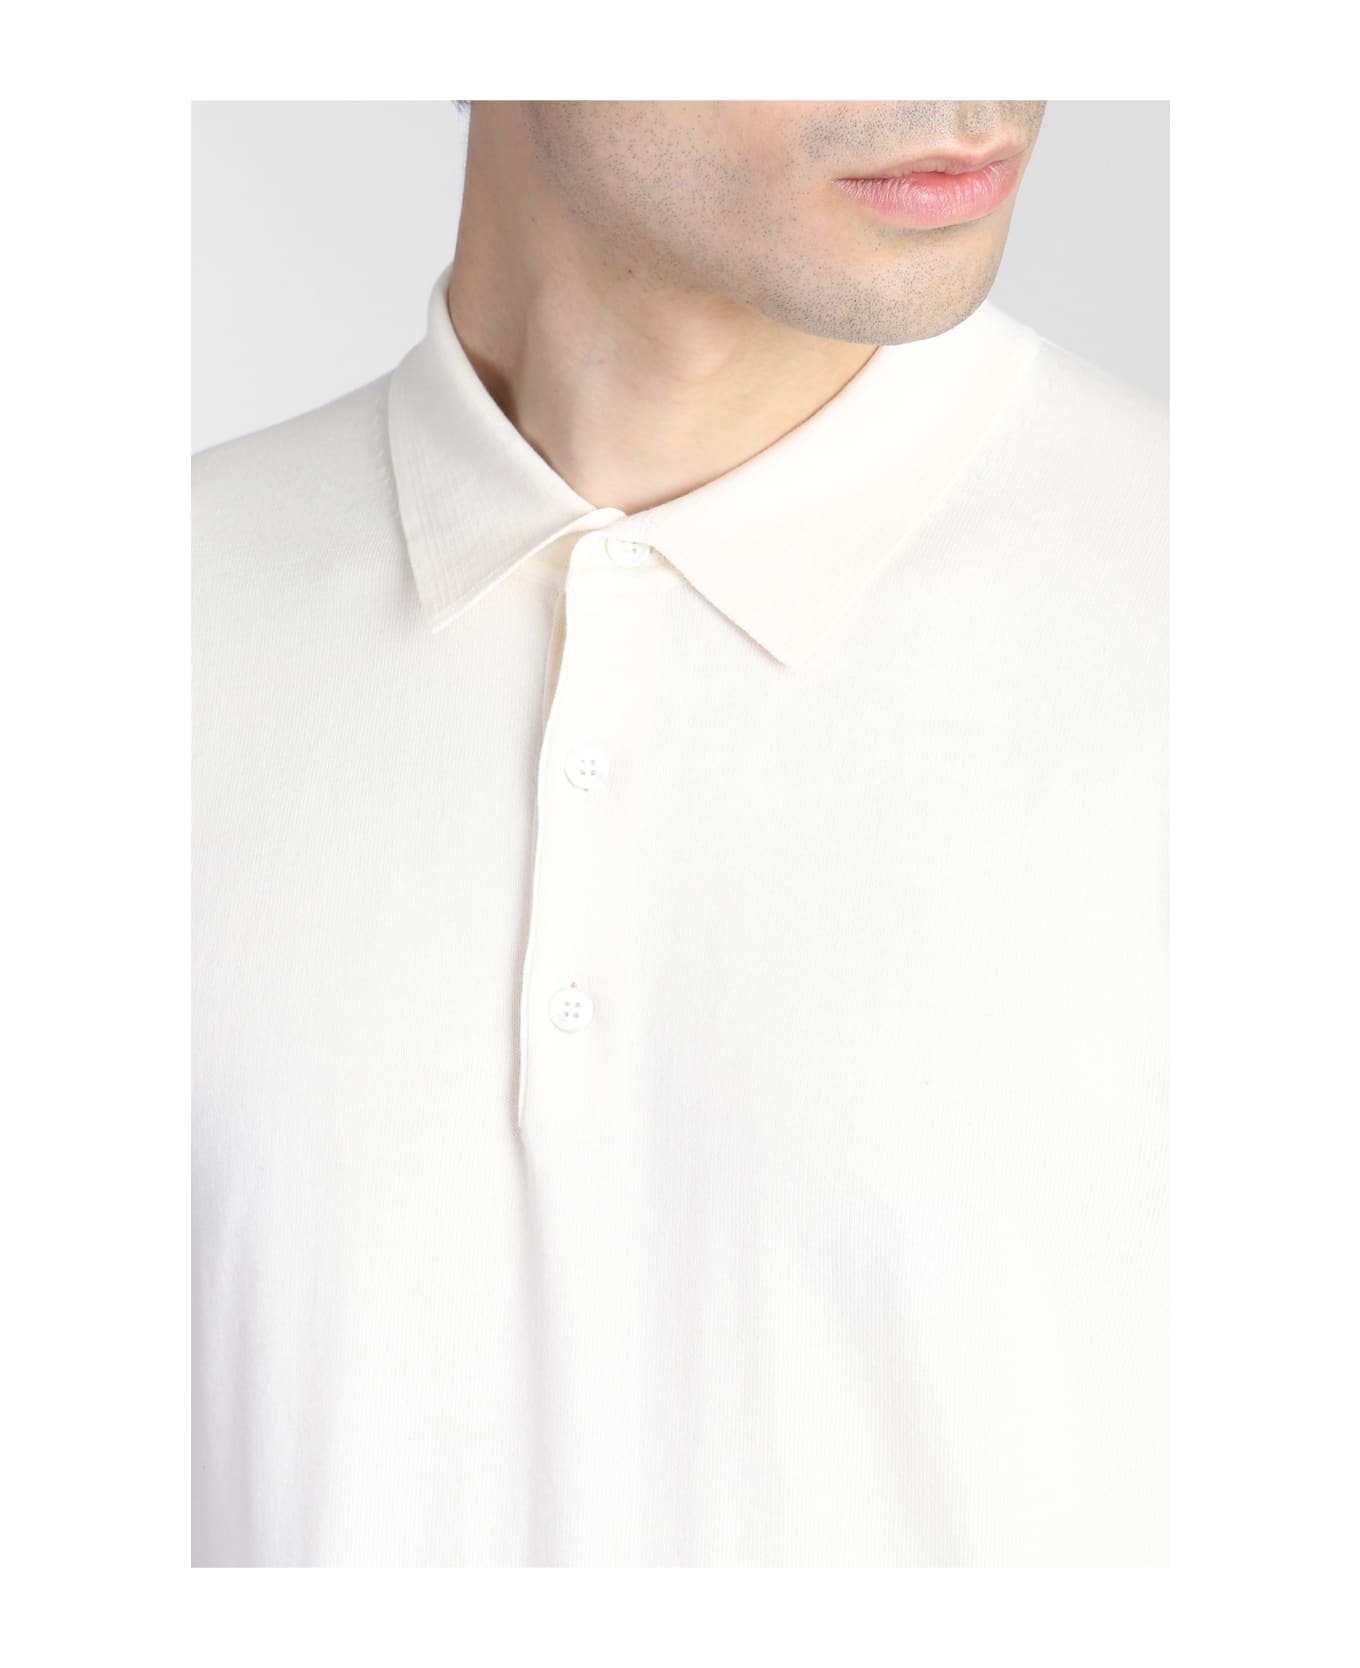 Baracuta Polo In White Cotton Baracuta - AVORY ポロシャツ